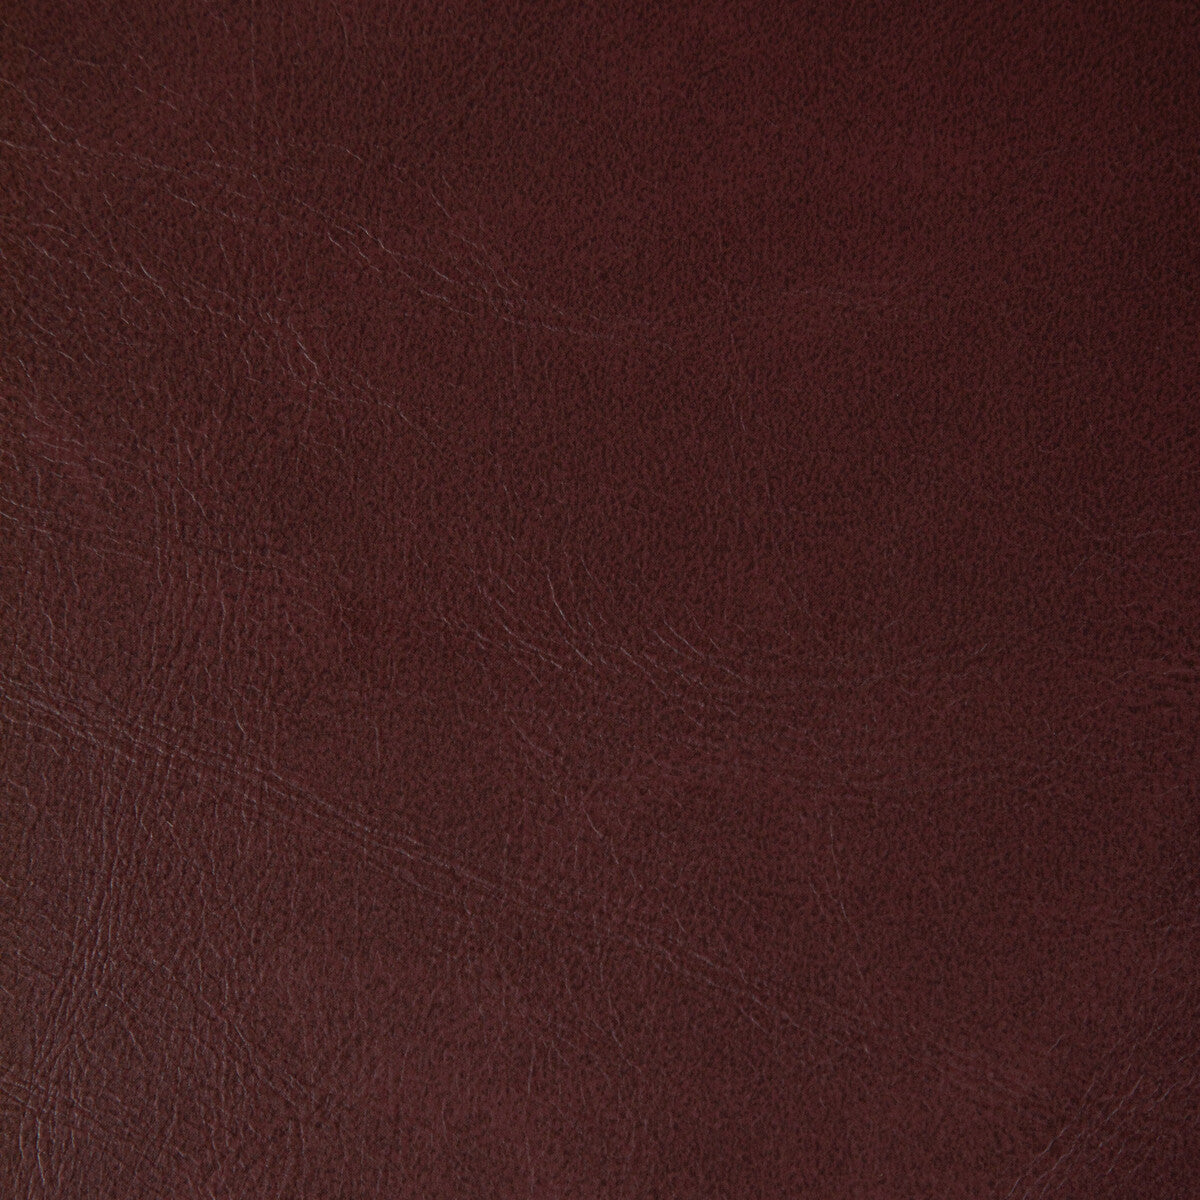 Rambler fabric in garnet color - pattern RAMBLER.919.0 - by Kravet Contract